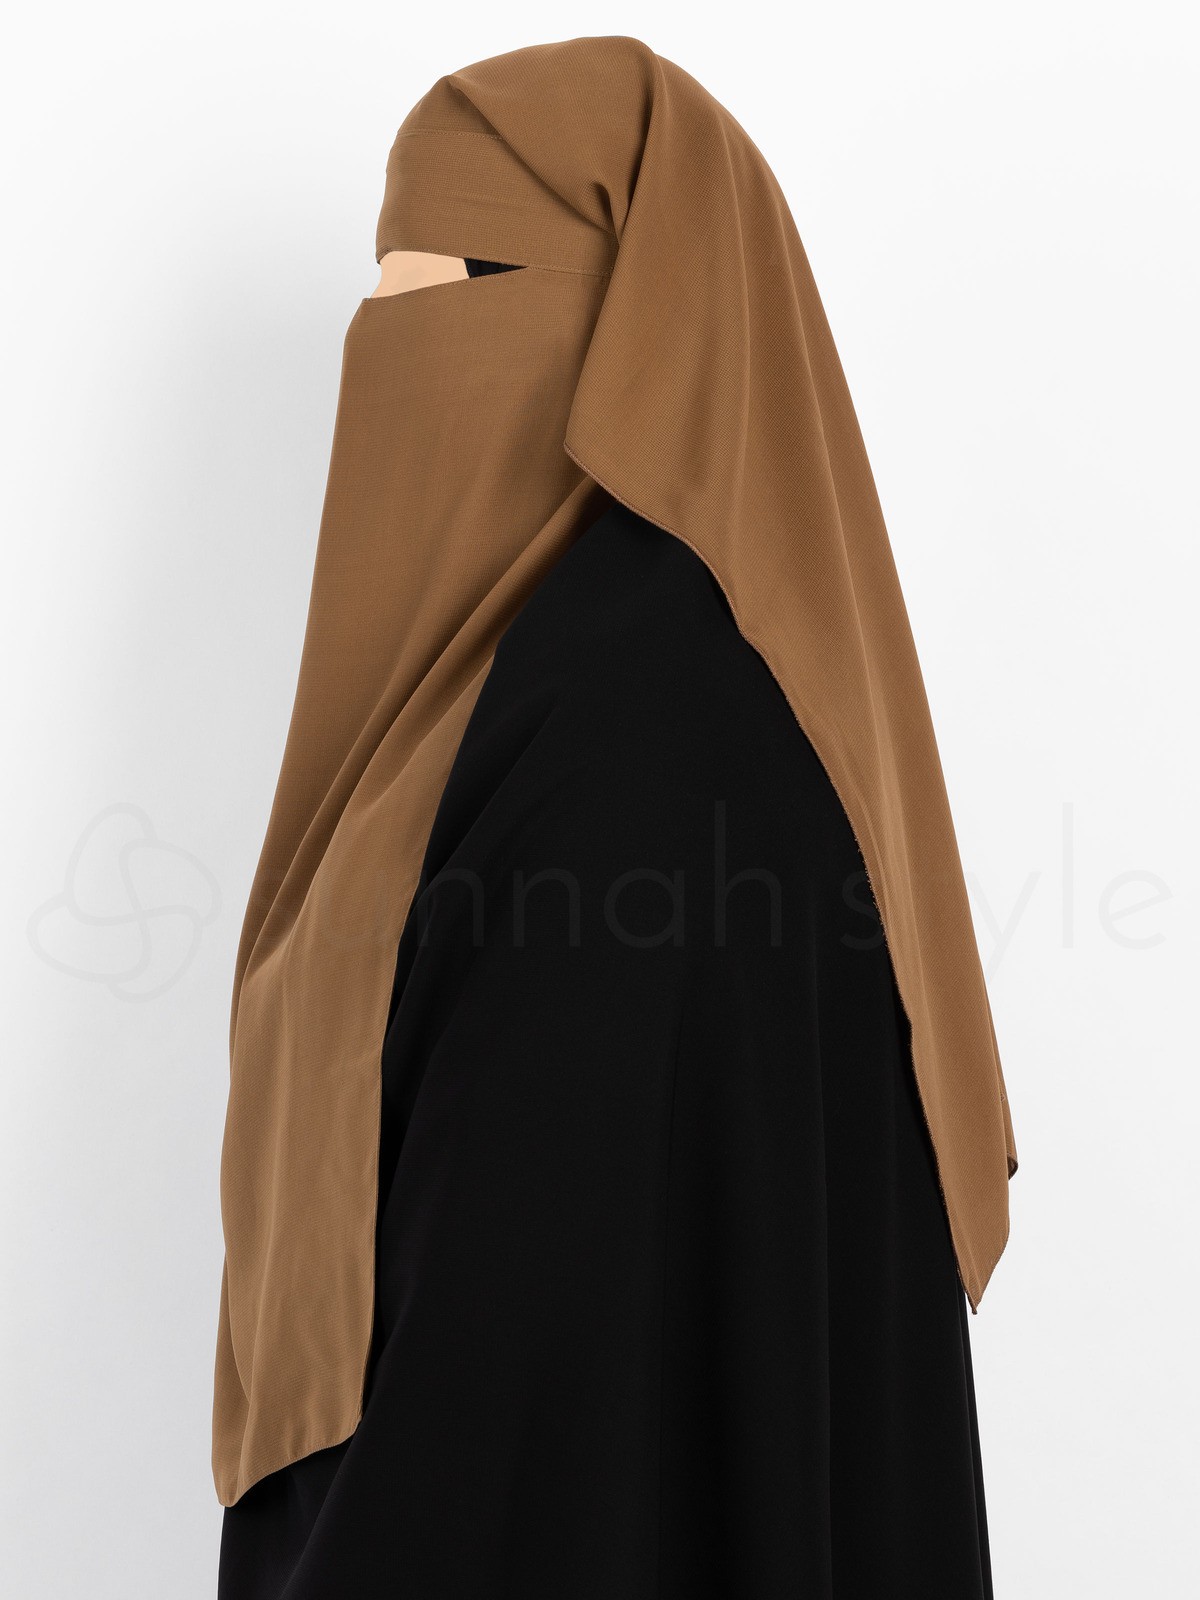 Sunnah Style - Long Two Layer Niqab (Caramel)